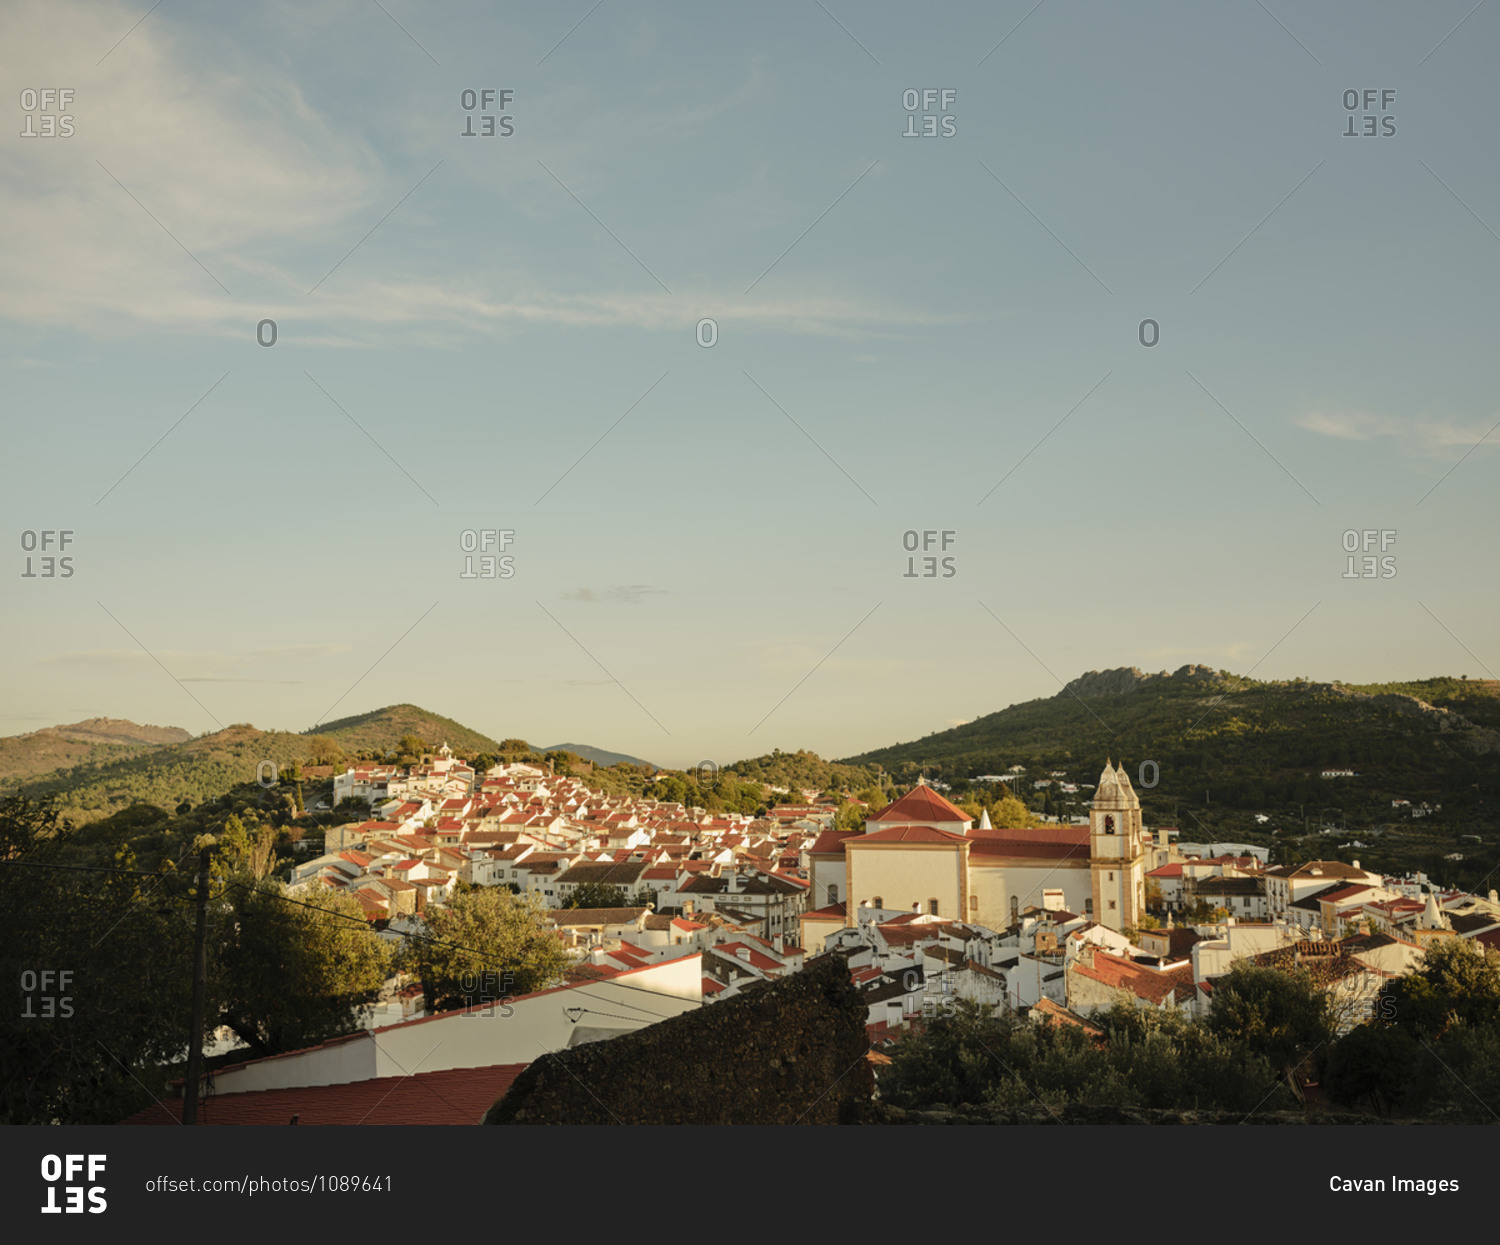 City view of Castelo De Vide at sunset stock photo -\
OFFSET